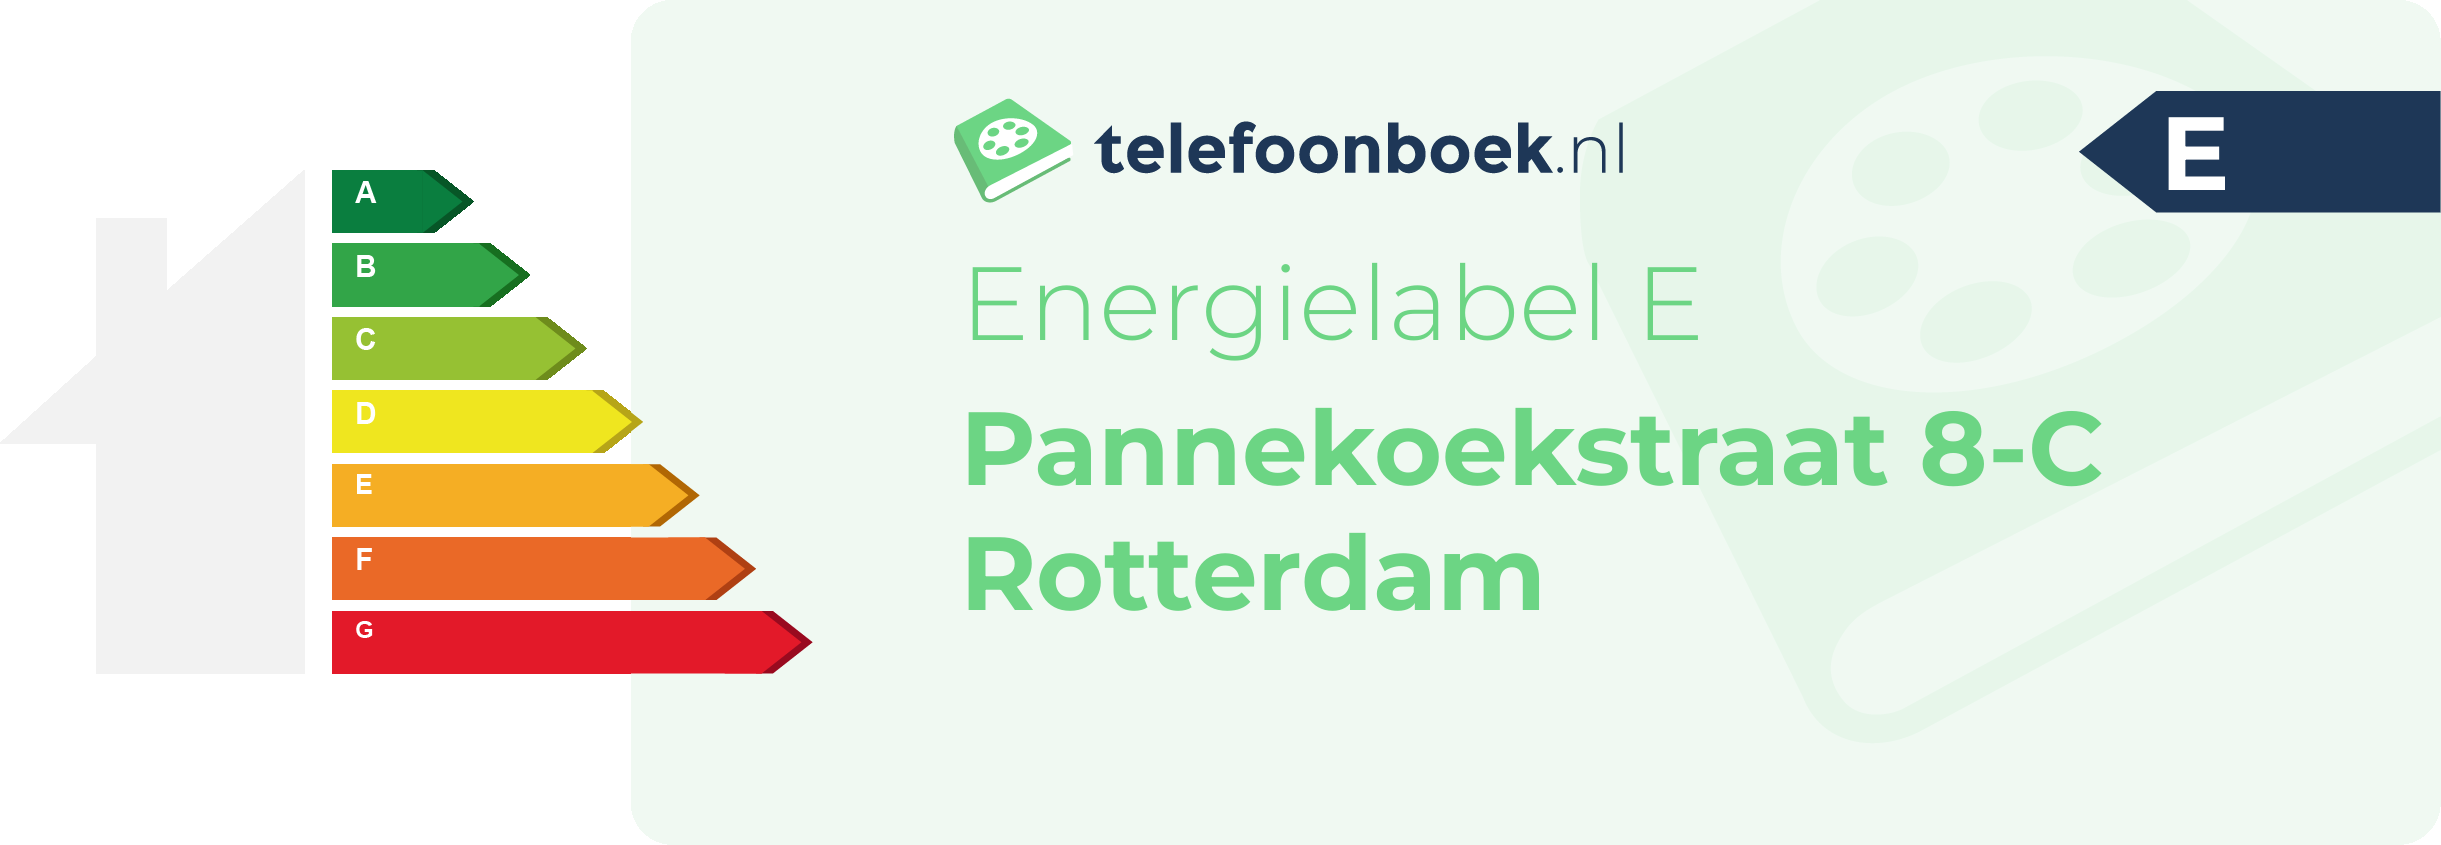 Energielabel Pannekoekstraat 8-C Rotterdam